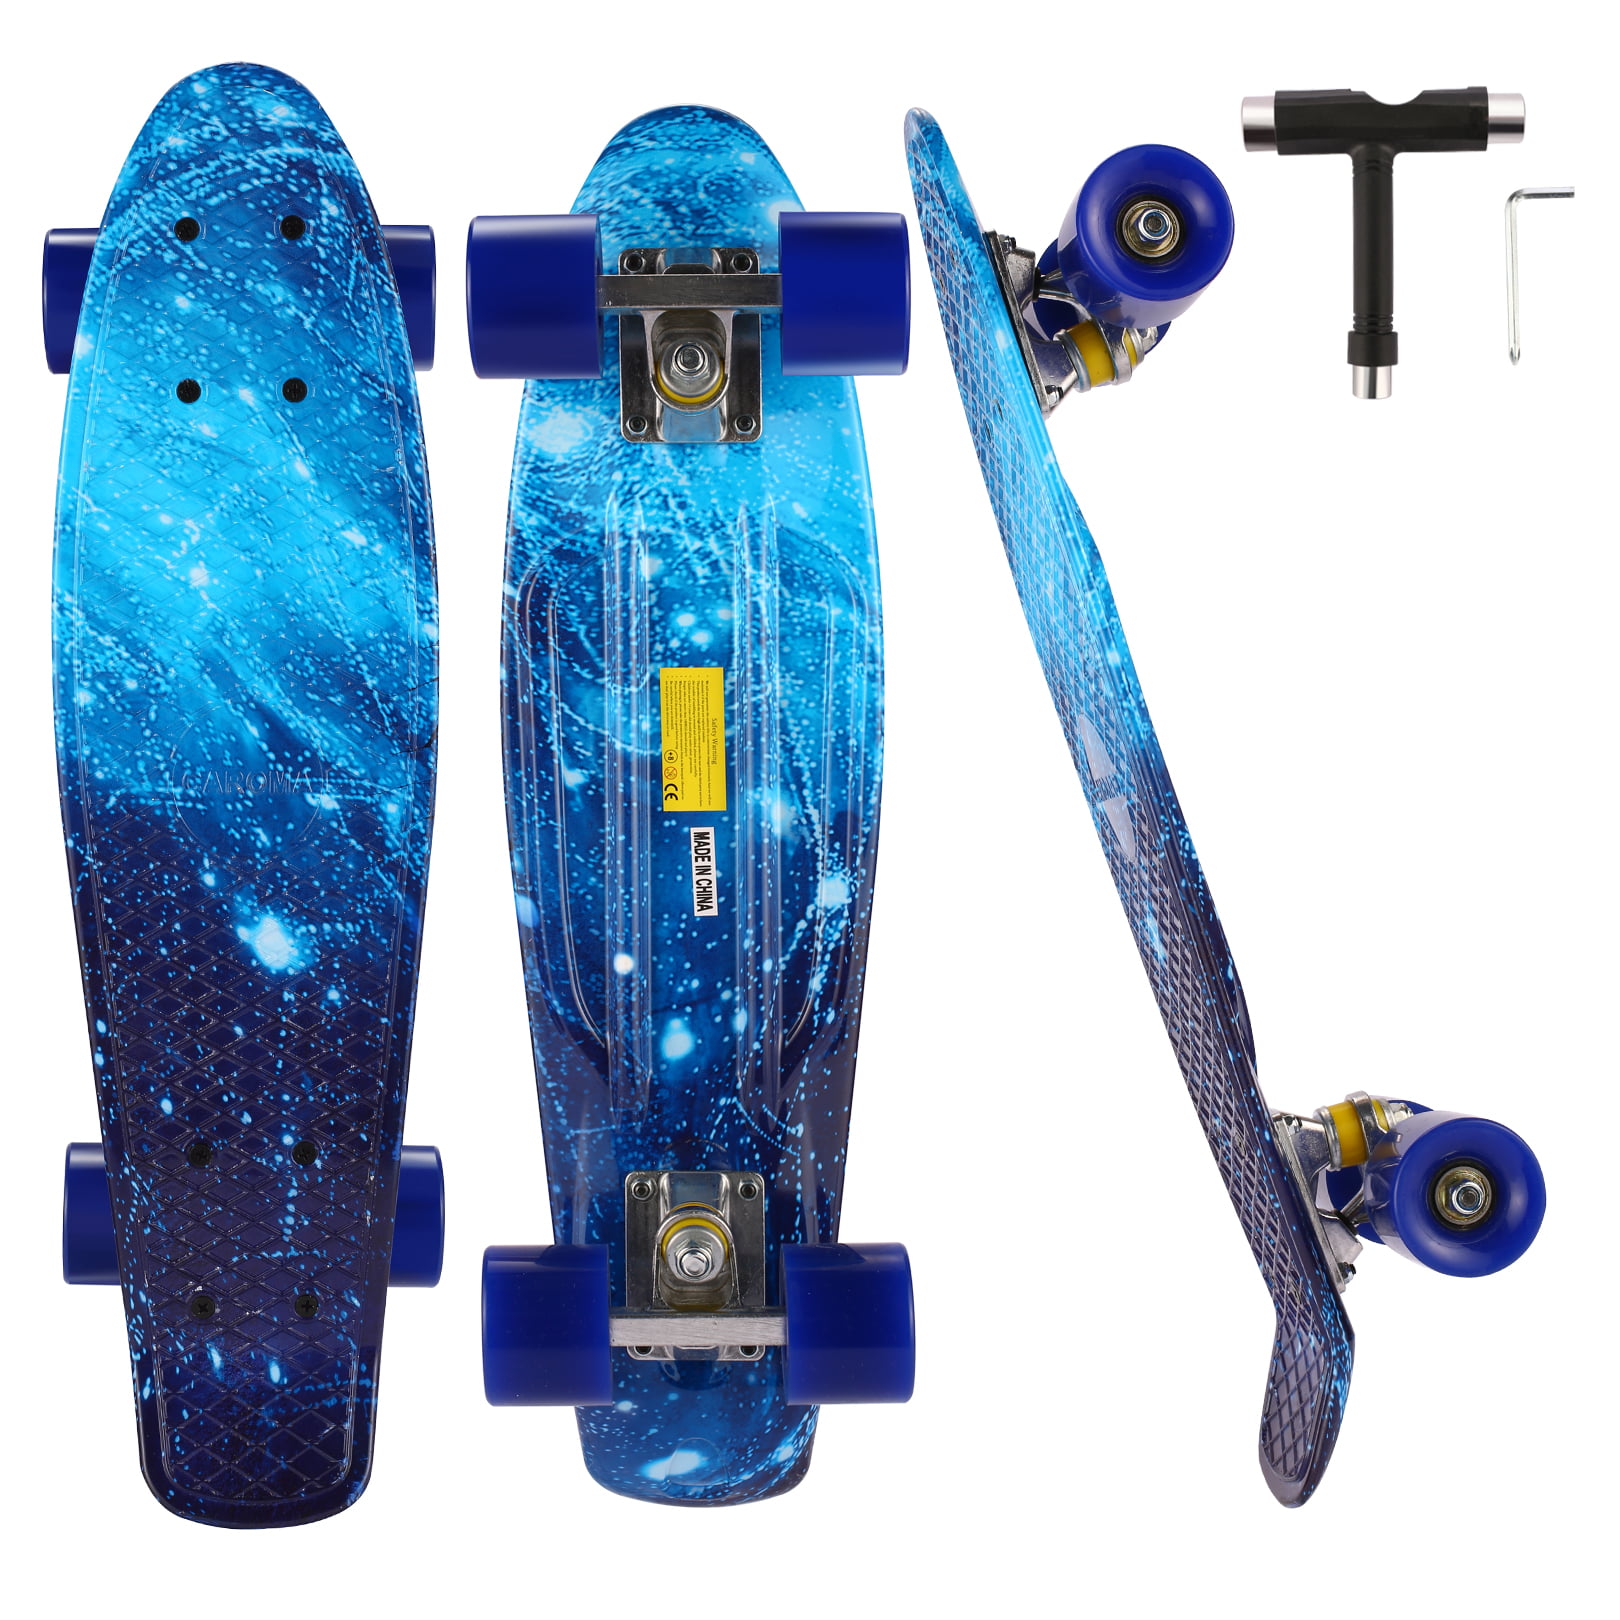 22" Complete Mini Cruiser Skateboard Deck w/ LED Light Up Wheels for Kids Teens. 